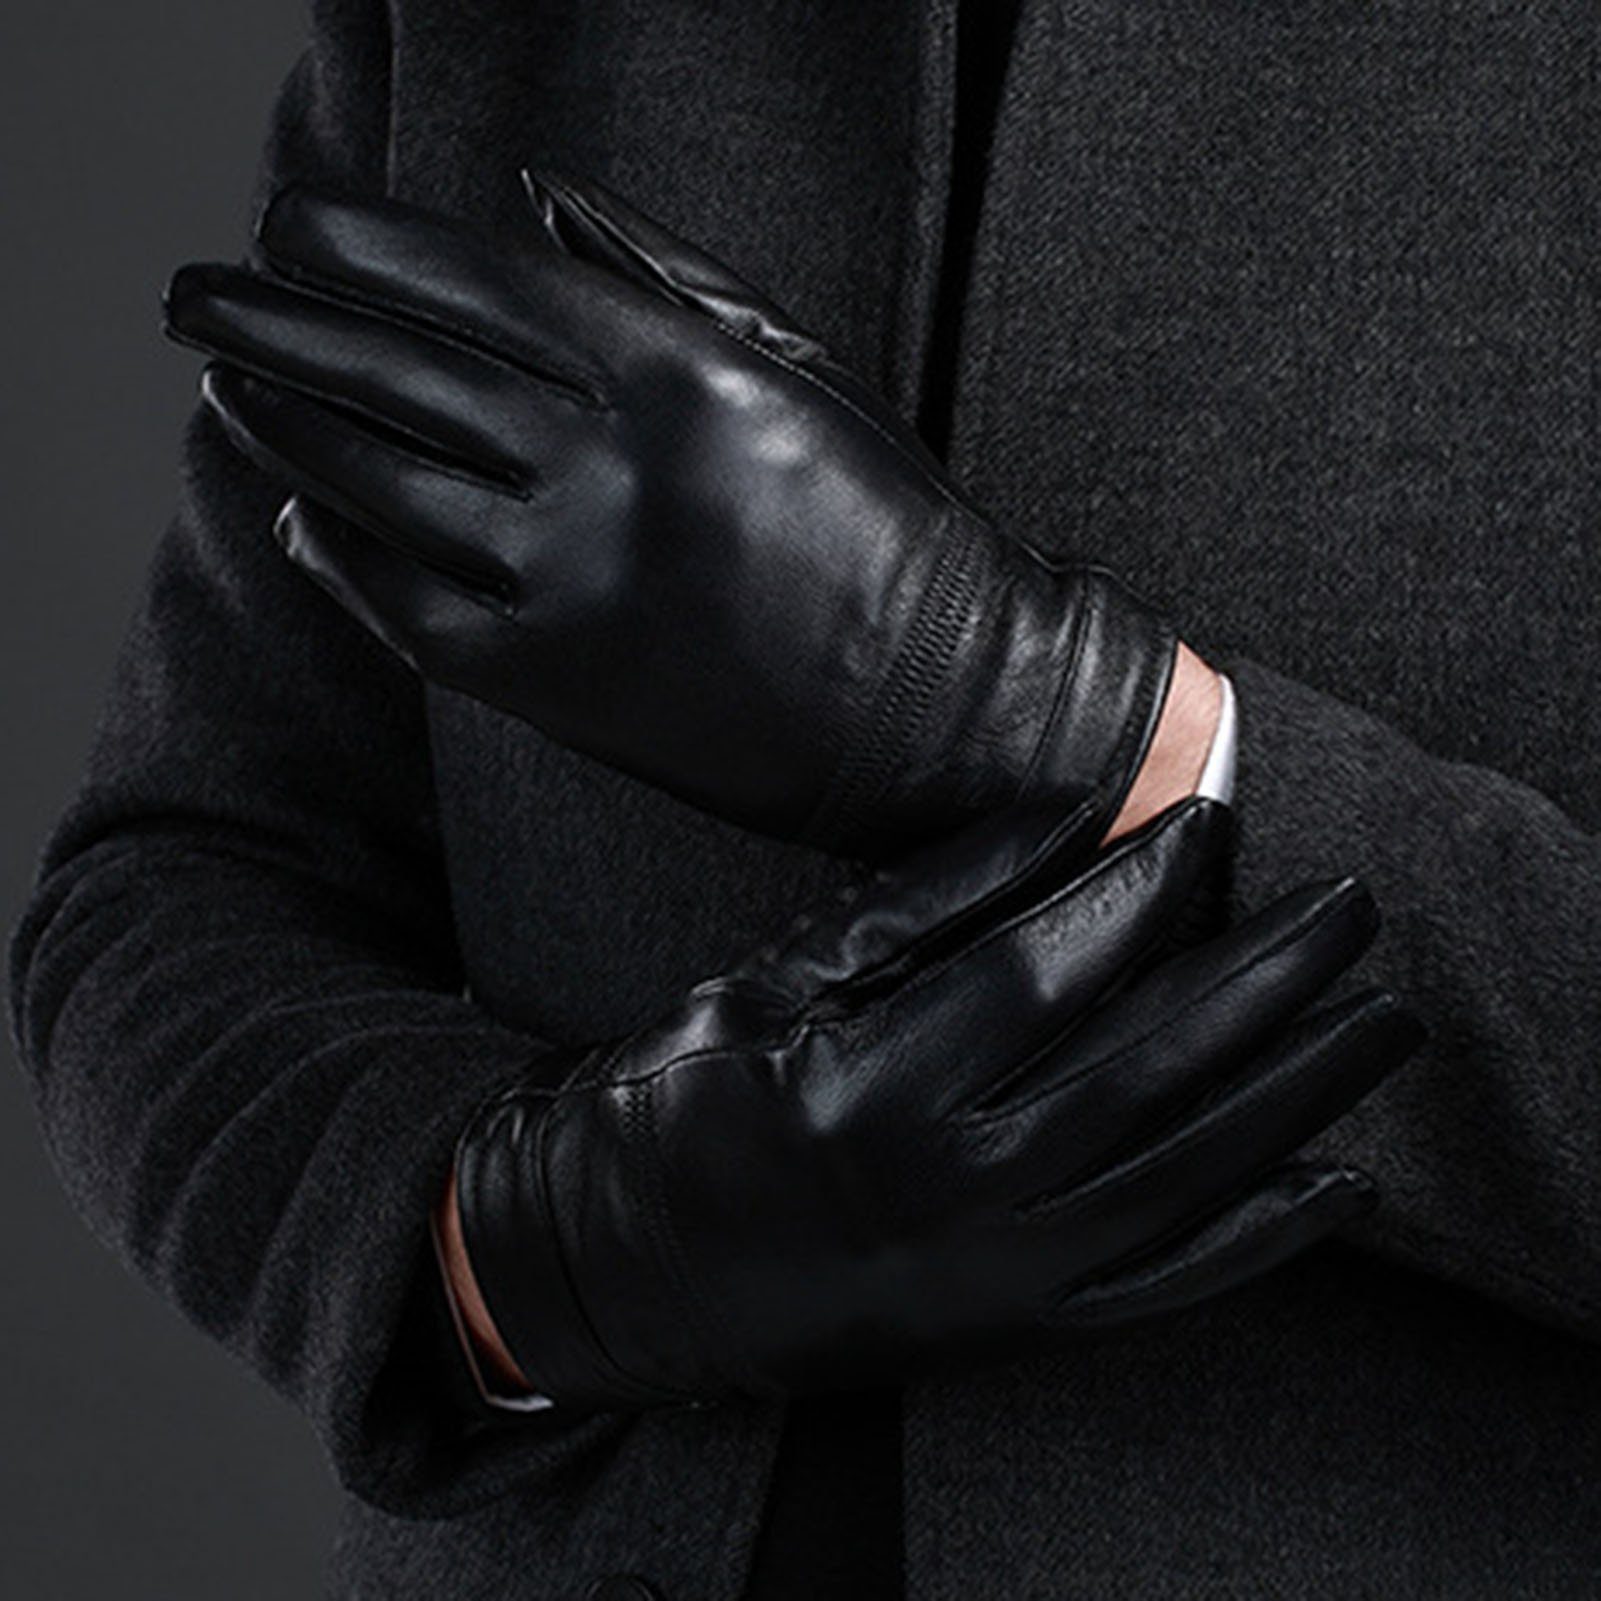 Blusmart Lederhandschuhe Herrenhandschuhe Aus Kunstwolle, Warm, Dick, Leder, Lederhandschuhe Fleecehandschuhe XL